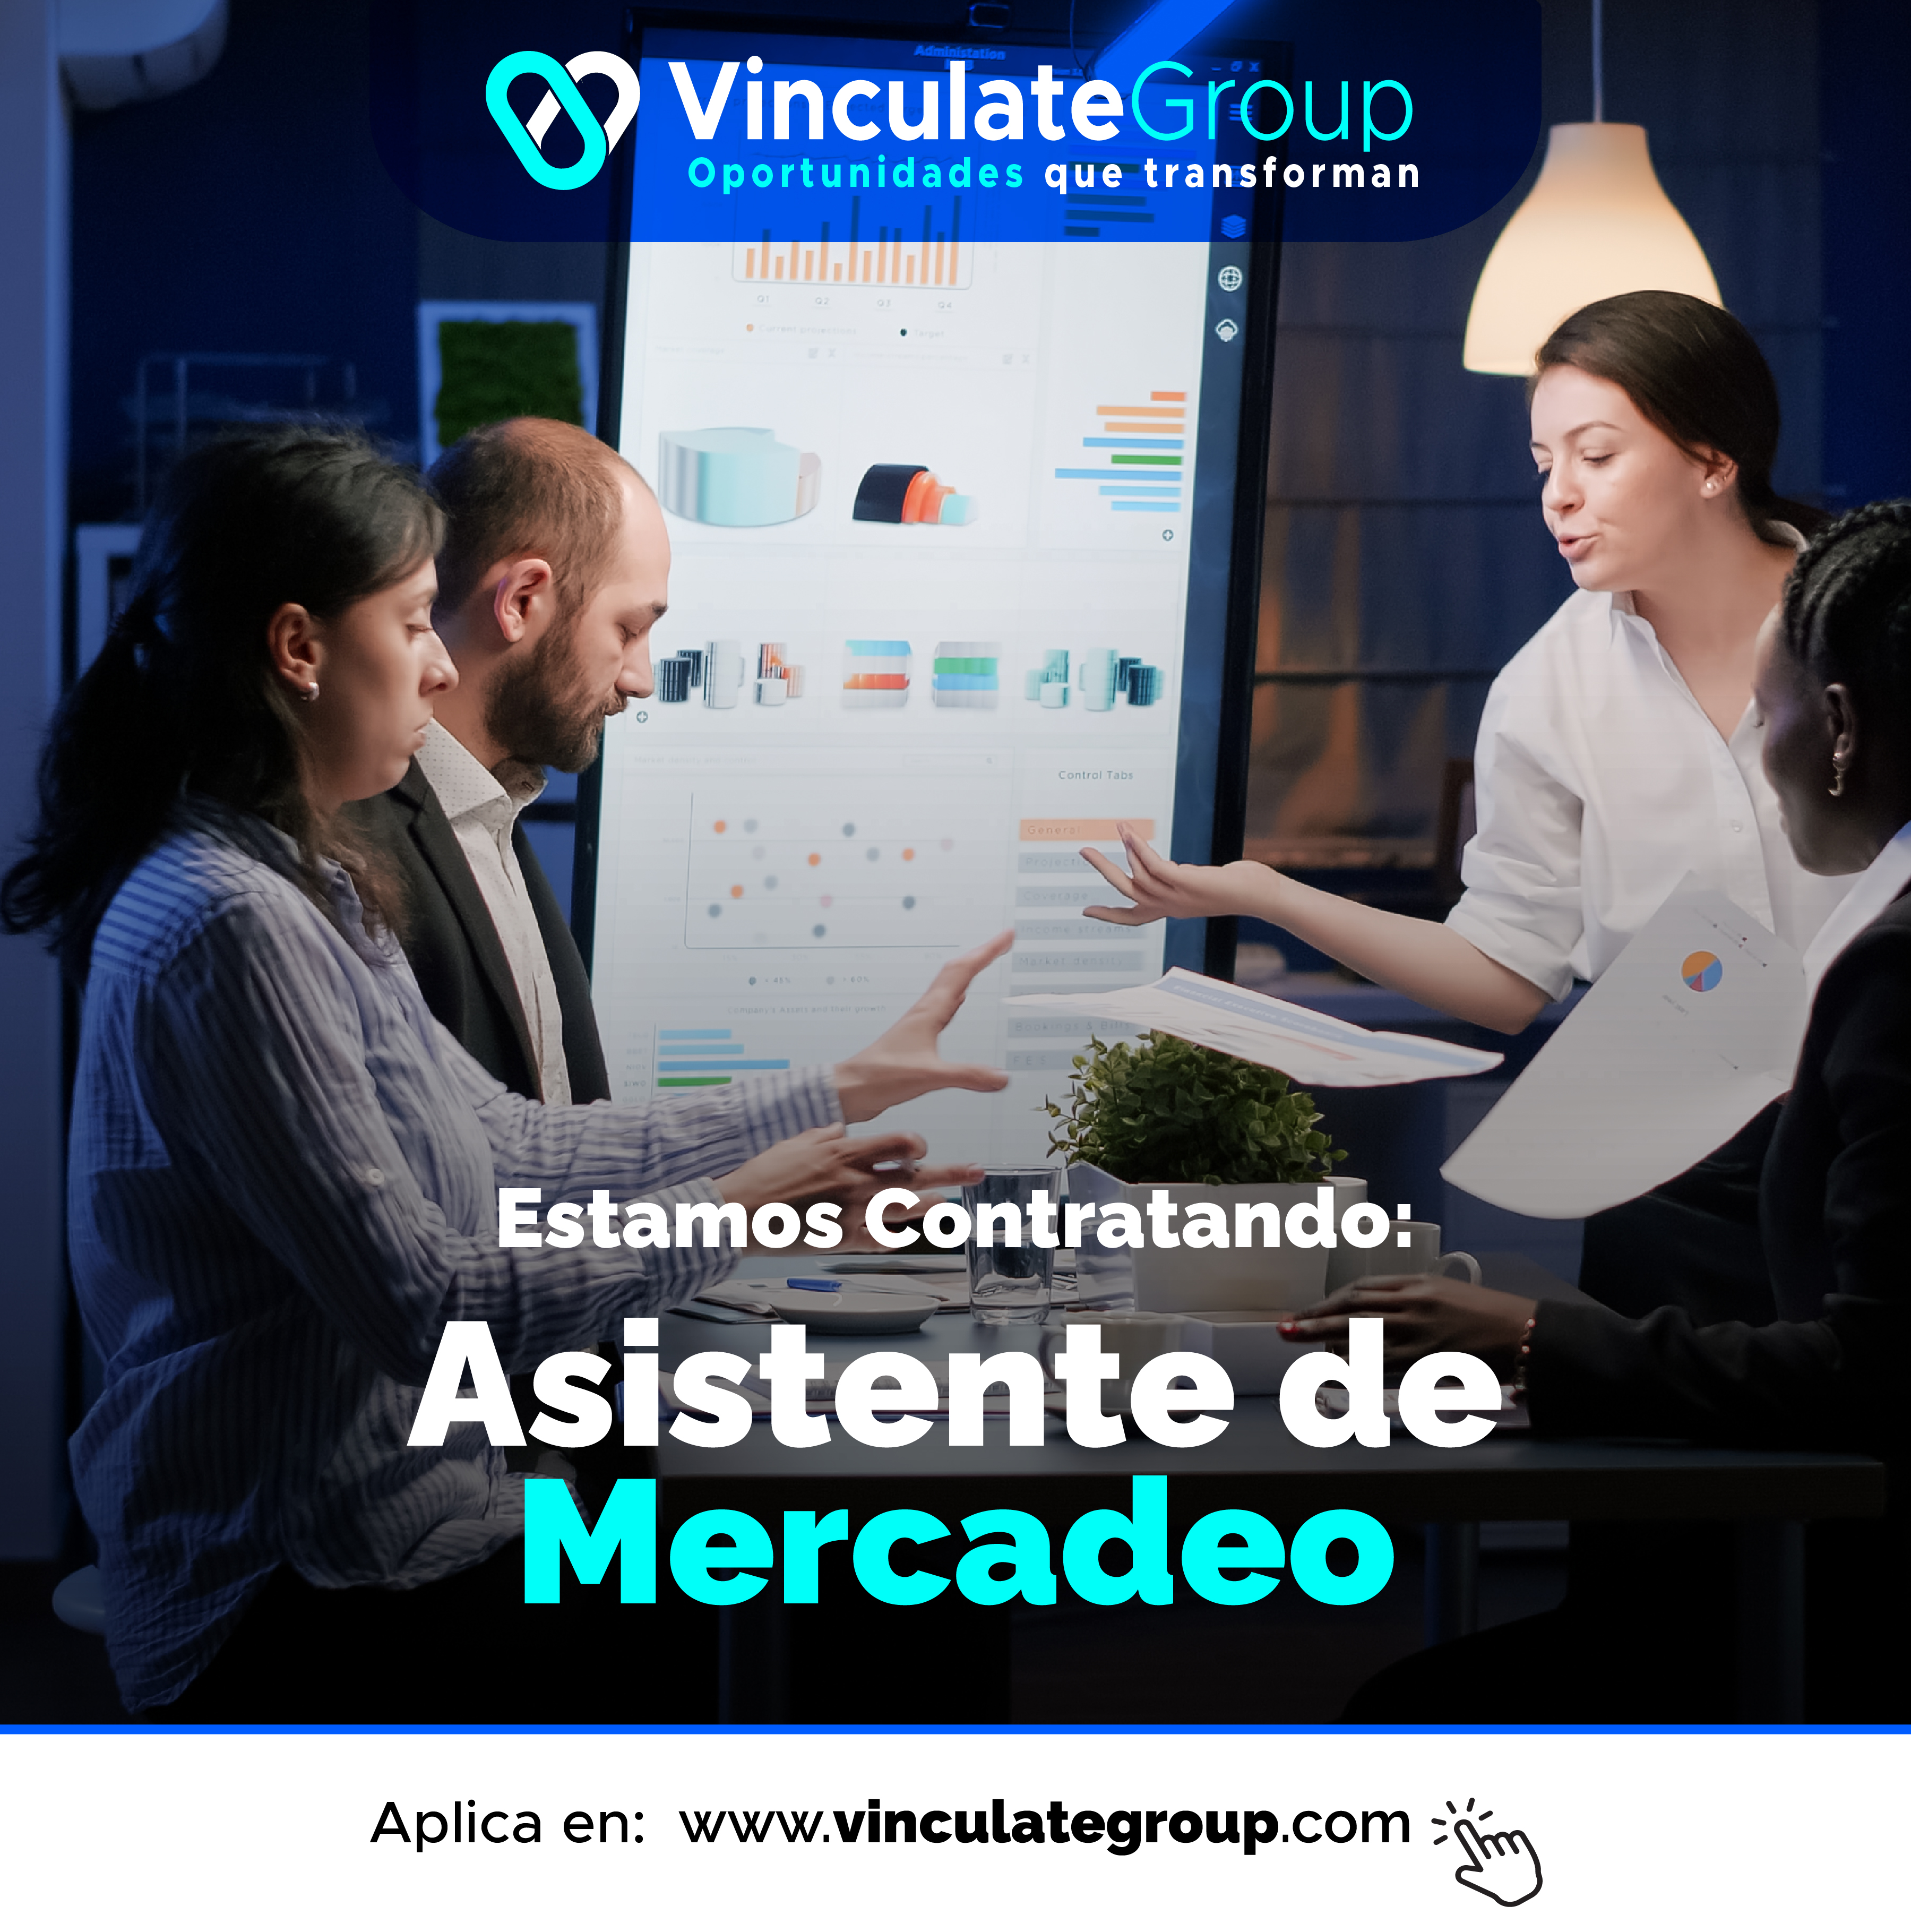 @) VinculateGroup

Oportunidades que transforman

    
         
   

&amp;
@®

5 Ce L

pp = de
Mercadeo

 

Aplica en: www.vinculategroup.com ¥